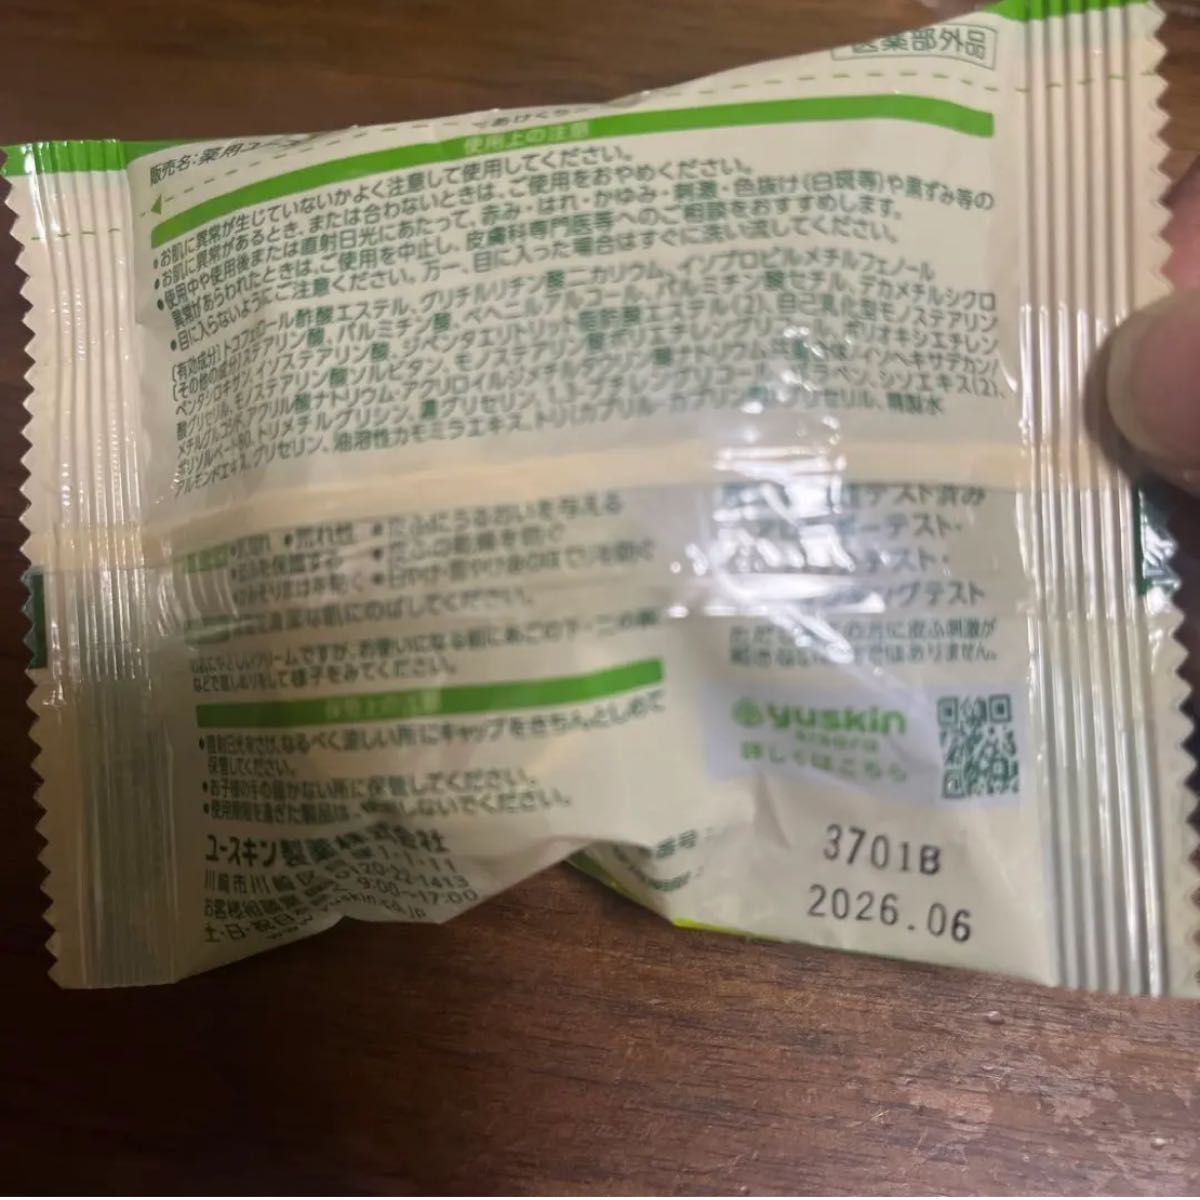 sisora ユースキンシソラクリーム4g(試供品)